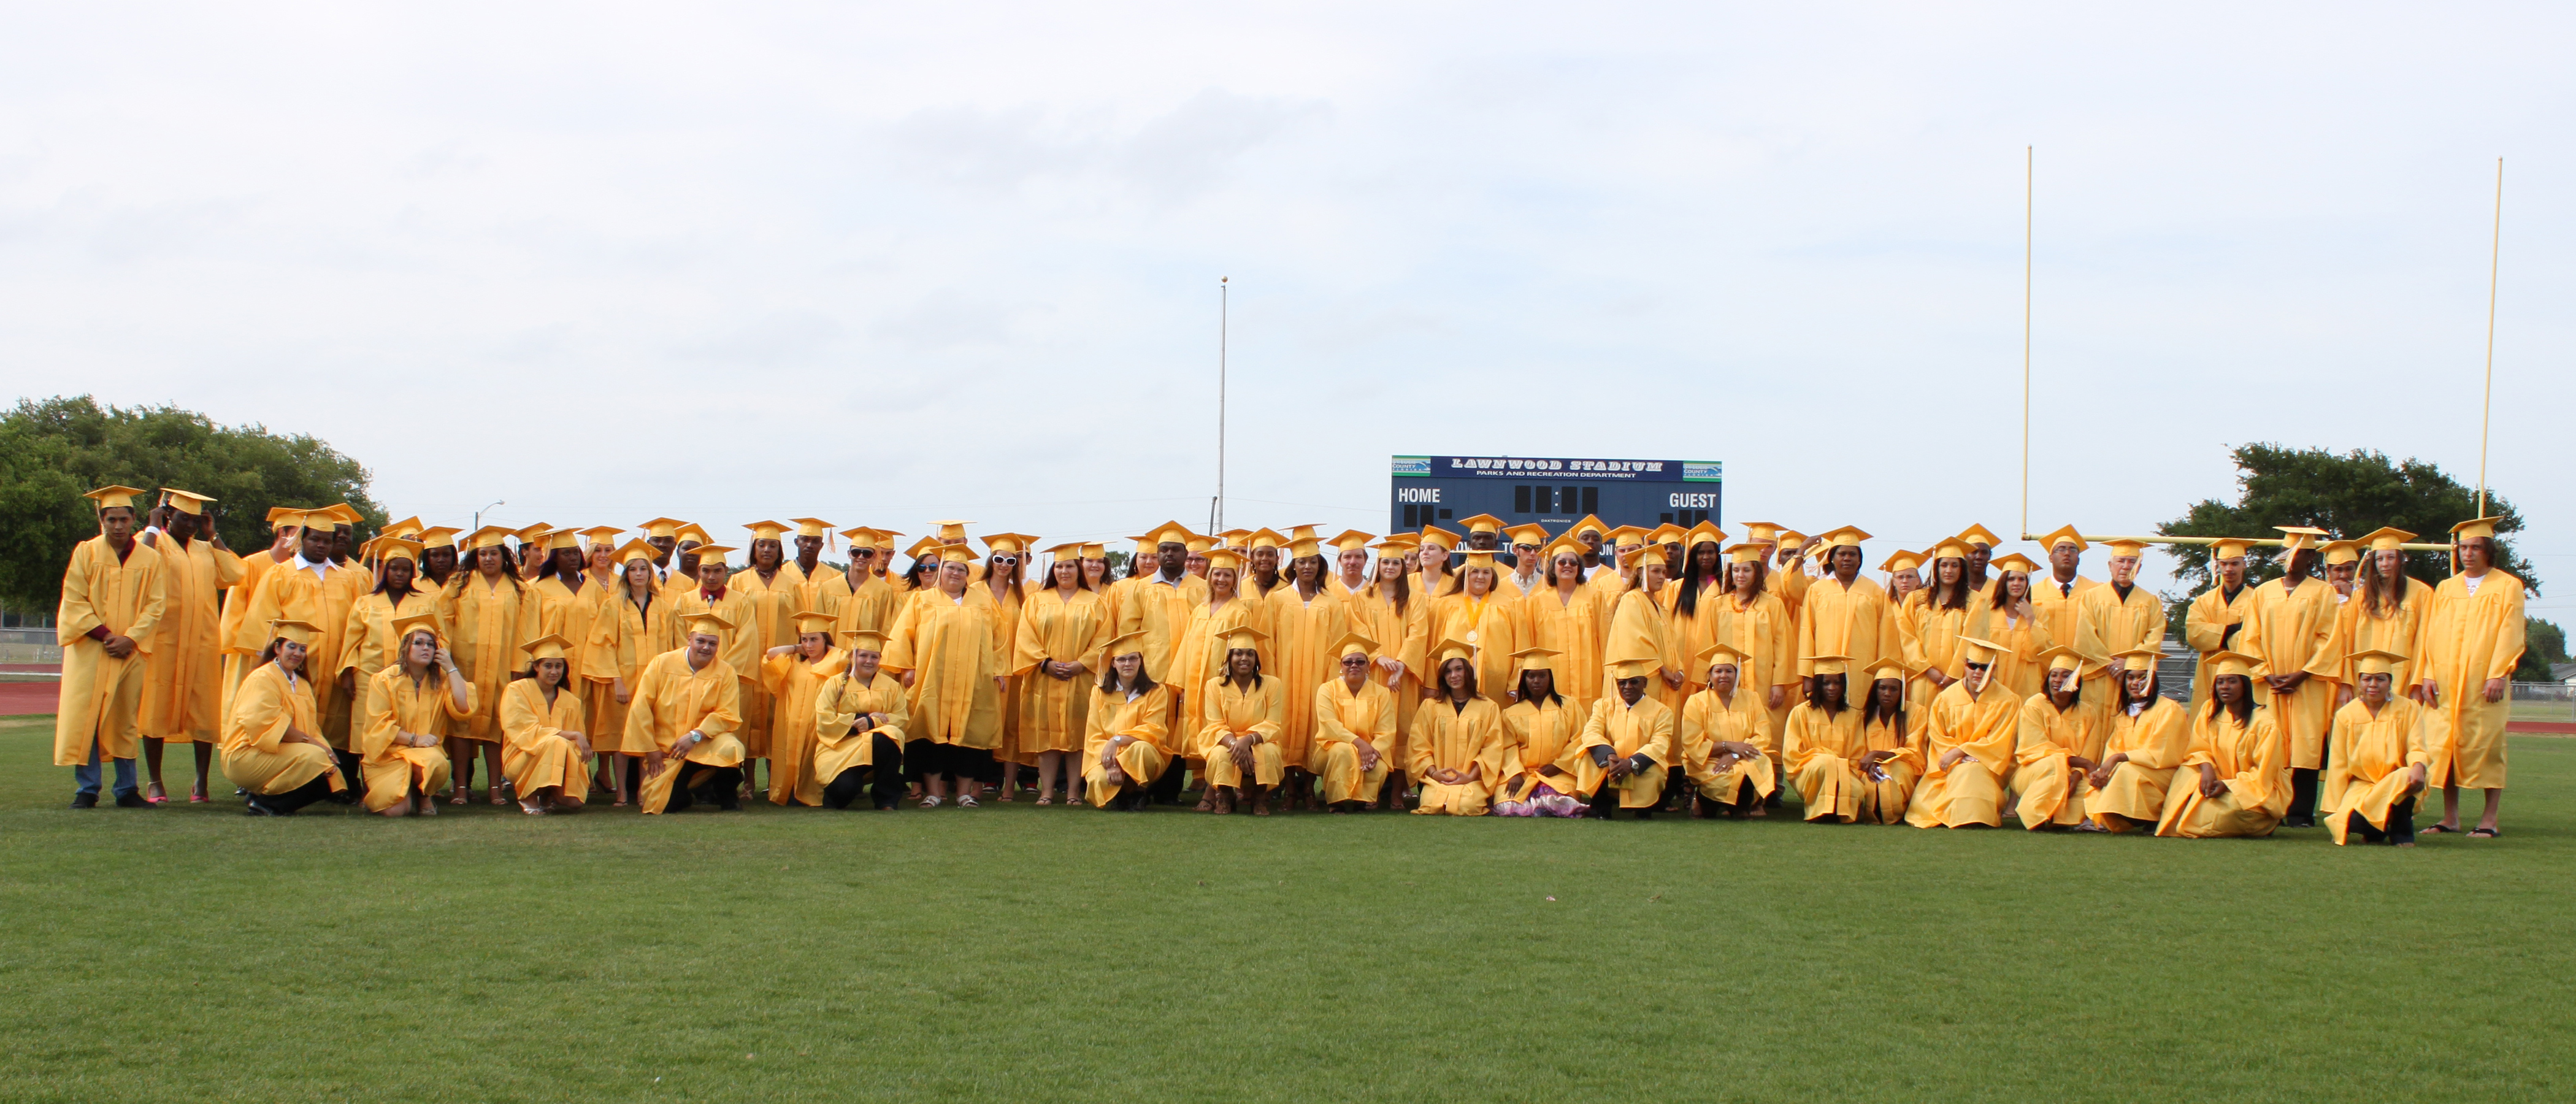 St. James Academy Graduating Class of 2009-2010